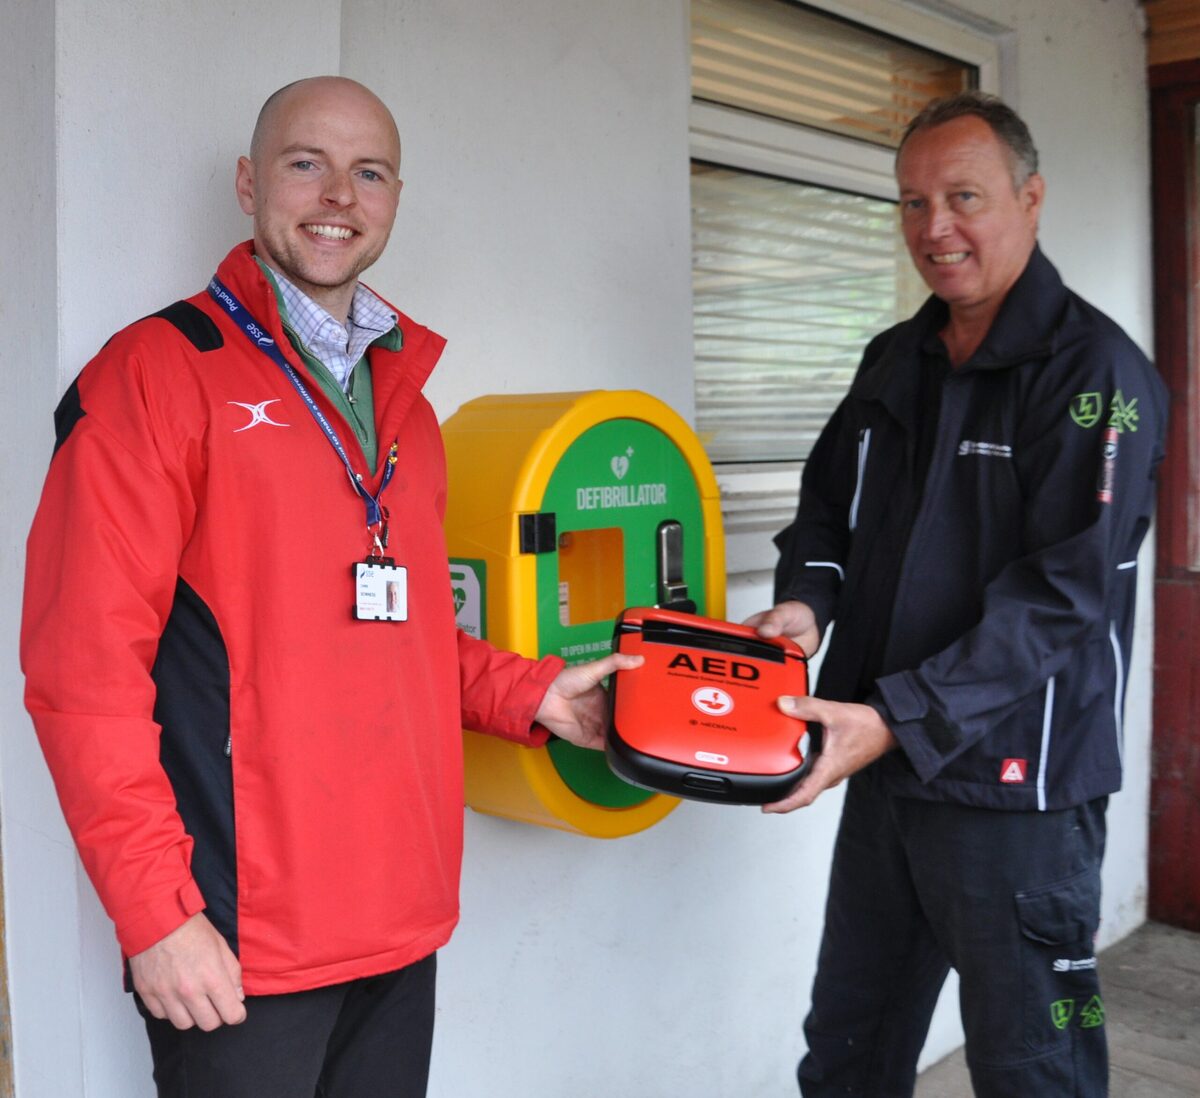 New defibrillator near ferry terminal